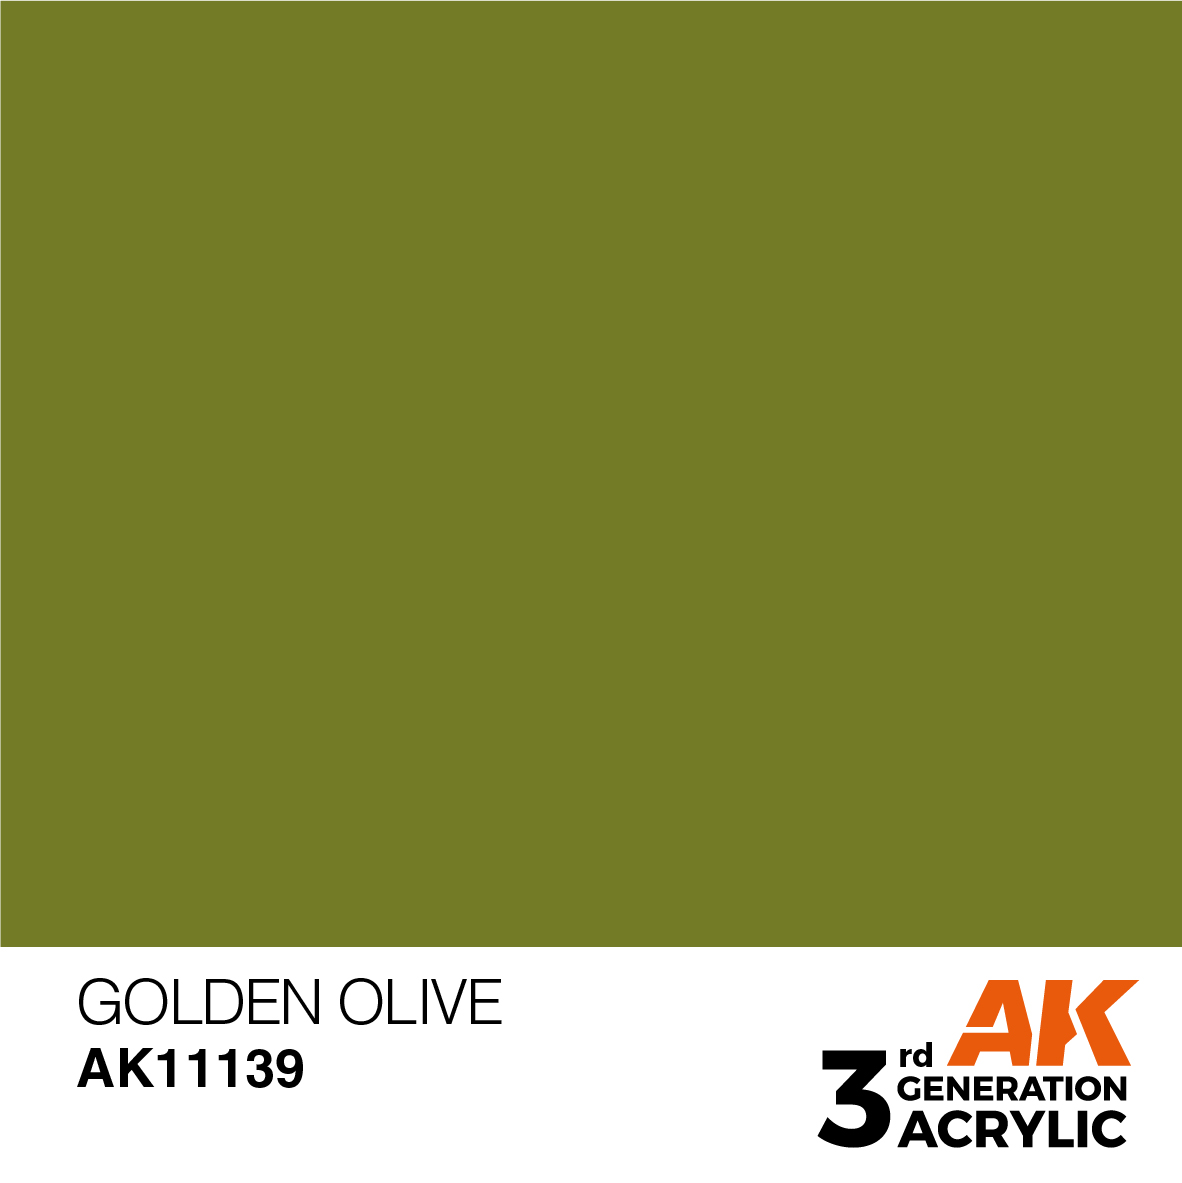 AK11139 Golden Olive (3rd-Generation) (17mL)